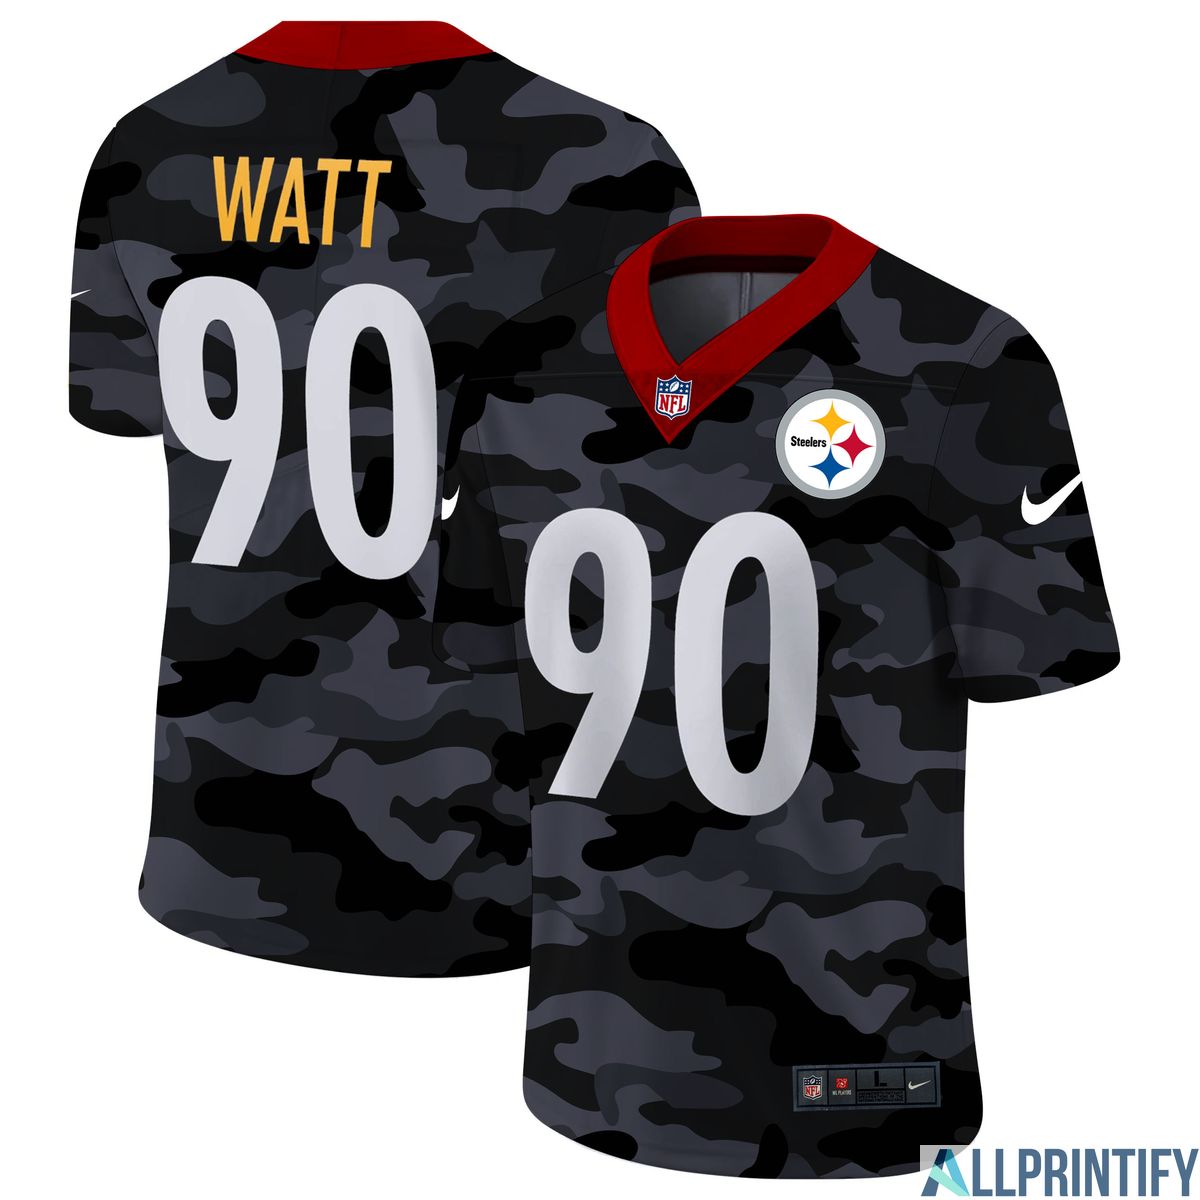 Trent Jordan Watt Pittsburgh Steelers 90 Limited Player Jersey Camo